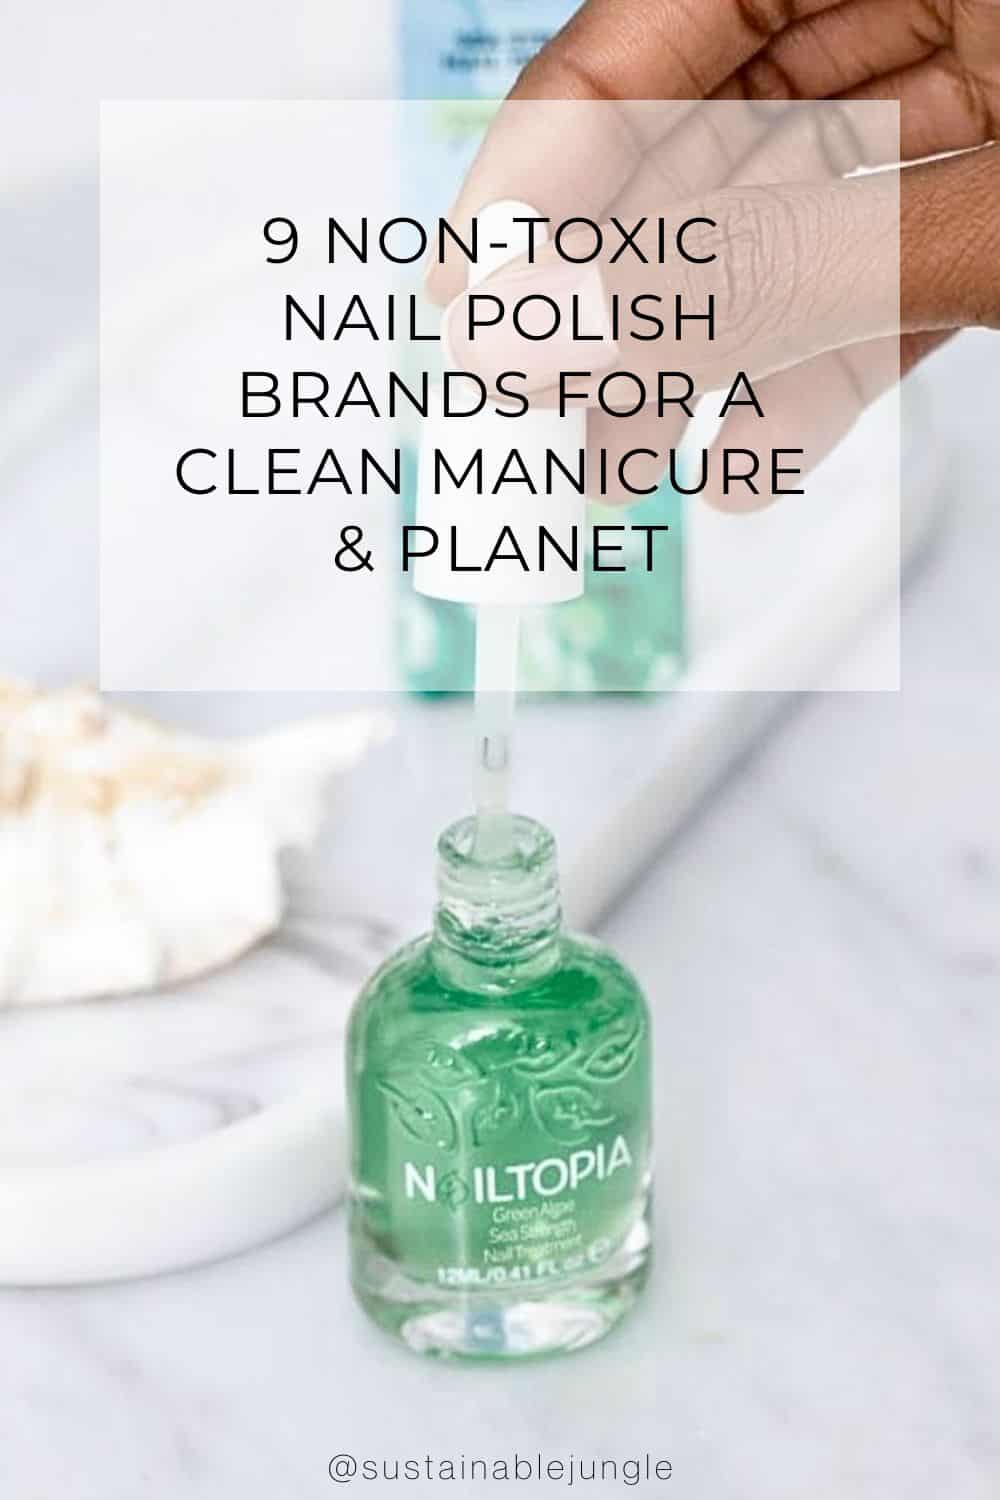 9 Non-Toxic Nail Polish Brands For a Clean Manicure & Planet Image by Nailtopia #nontoxicnailpolish #bestnontoxicnailpolish #naturalnailpolish #naturalfingernailpolish #nontoxicnaturalnailpolish #nontoxicorganicnailpolish #sustainablejungle